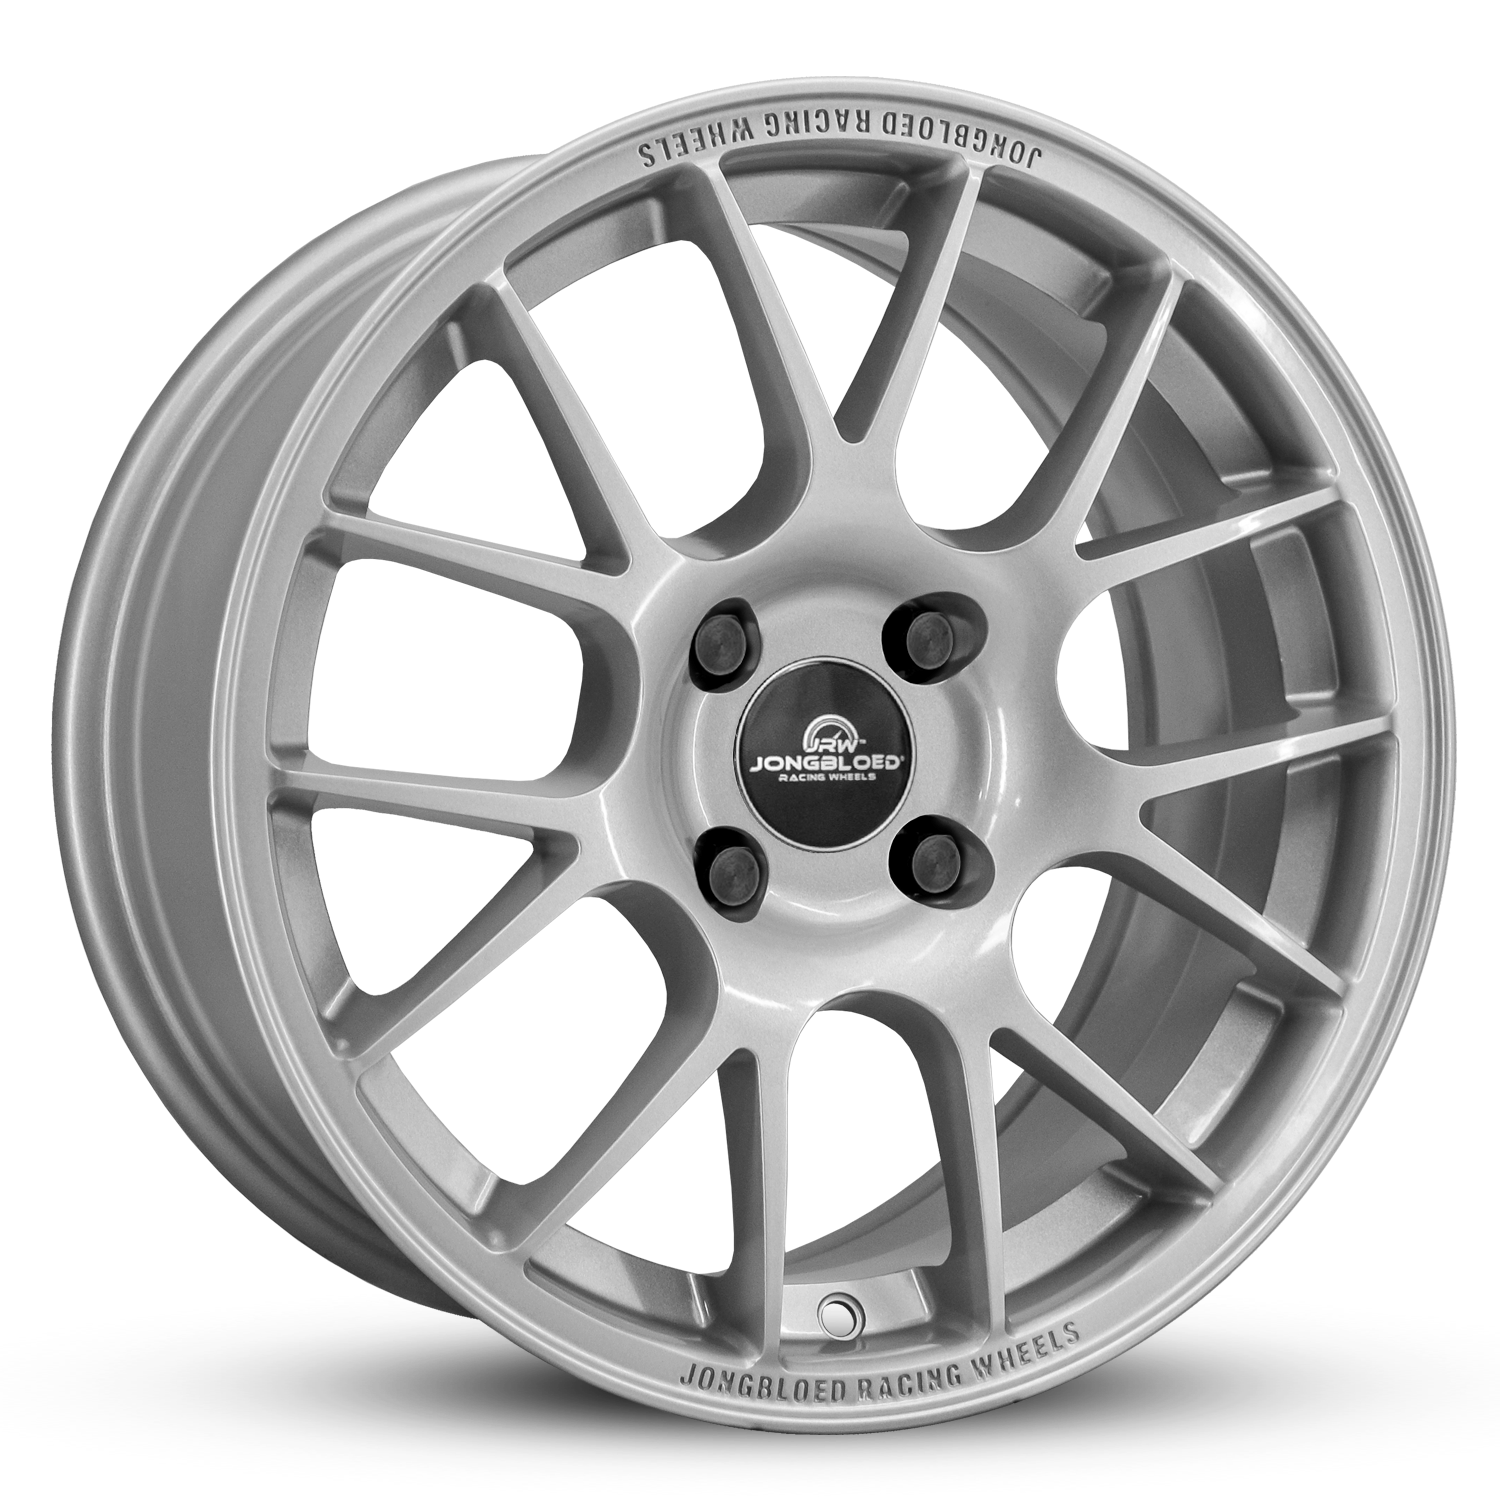 Jongbloed Racing Wheels SPEC MIATA PTS Series 400 Racing Wheel Rims in All Gloss Silver